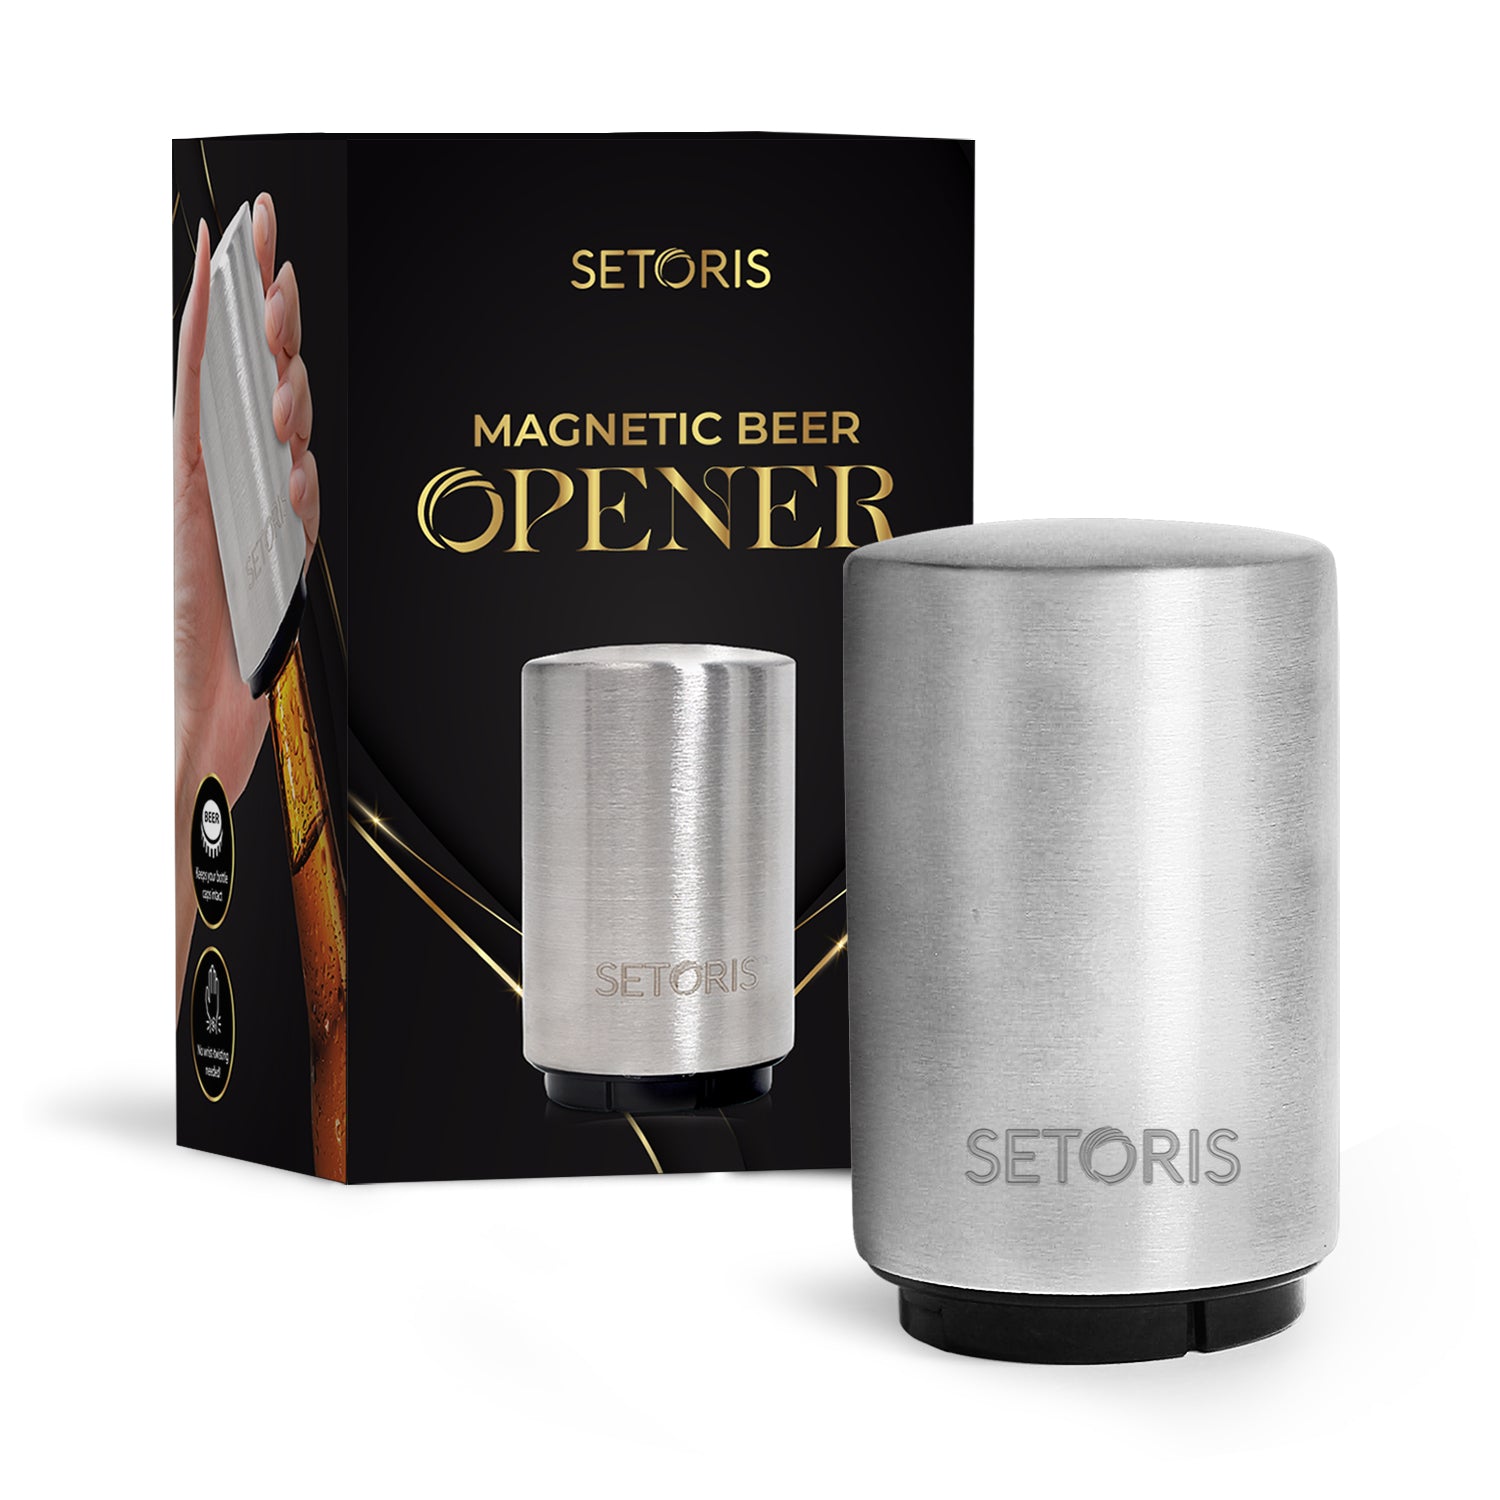 Magnetic Beer Bottle Opener By Setoris- Stainless Steel Automatic Pop